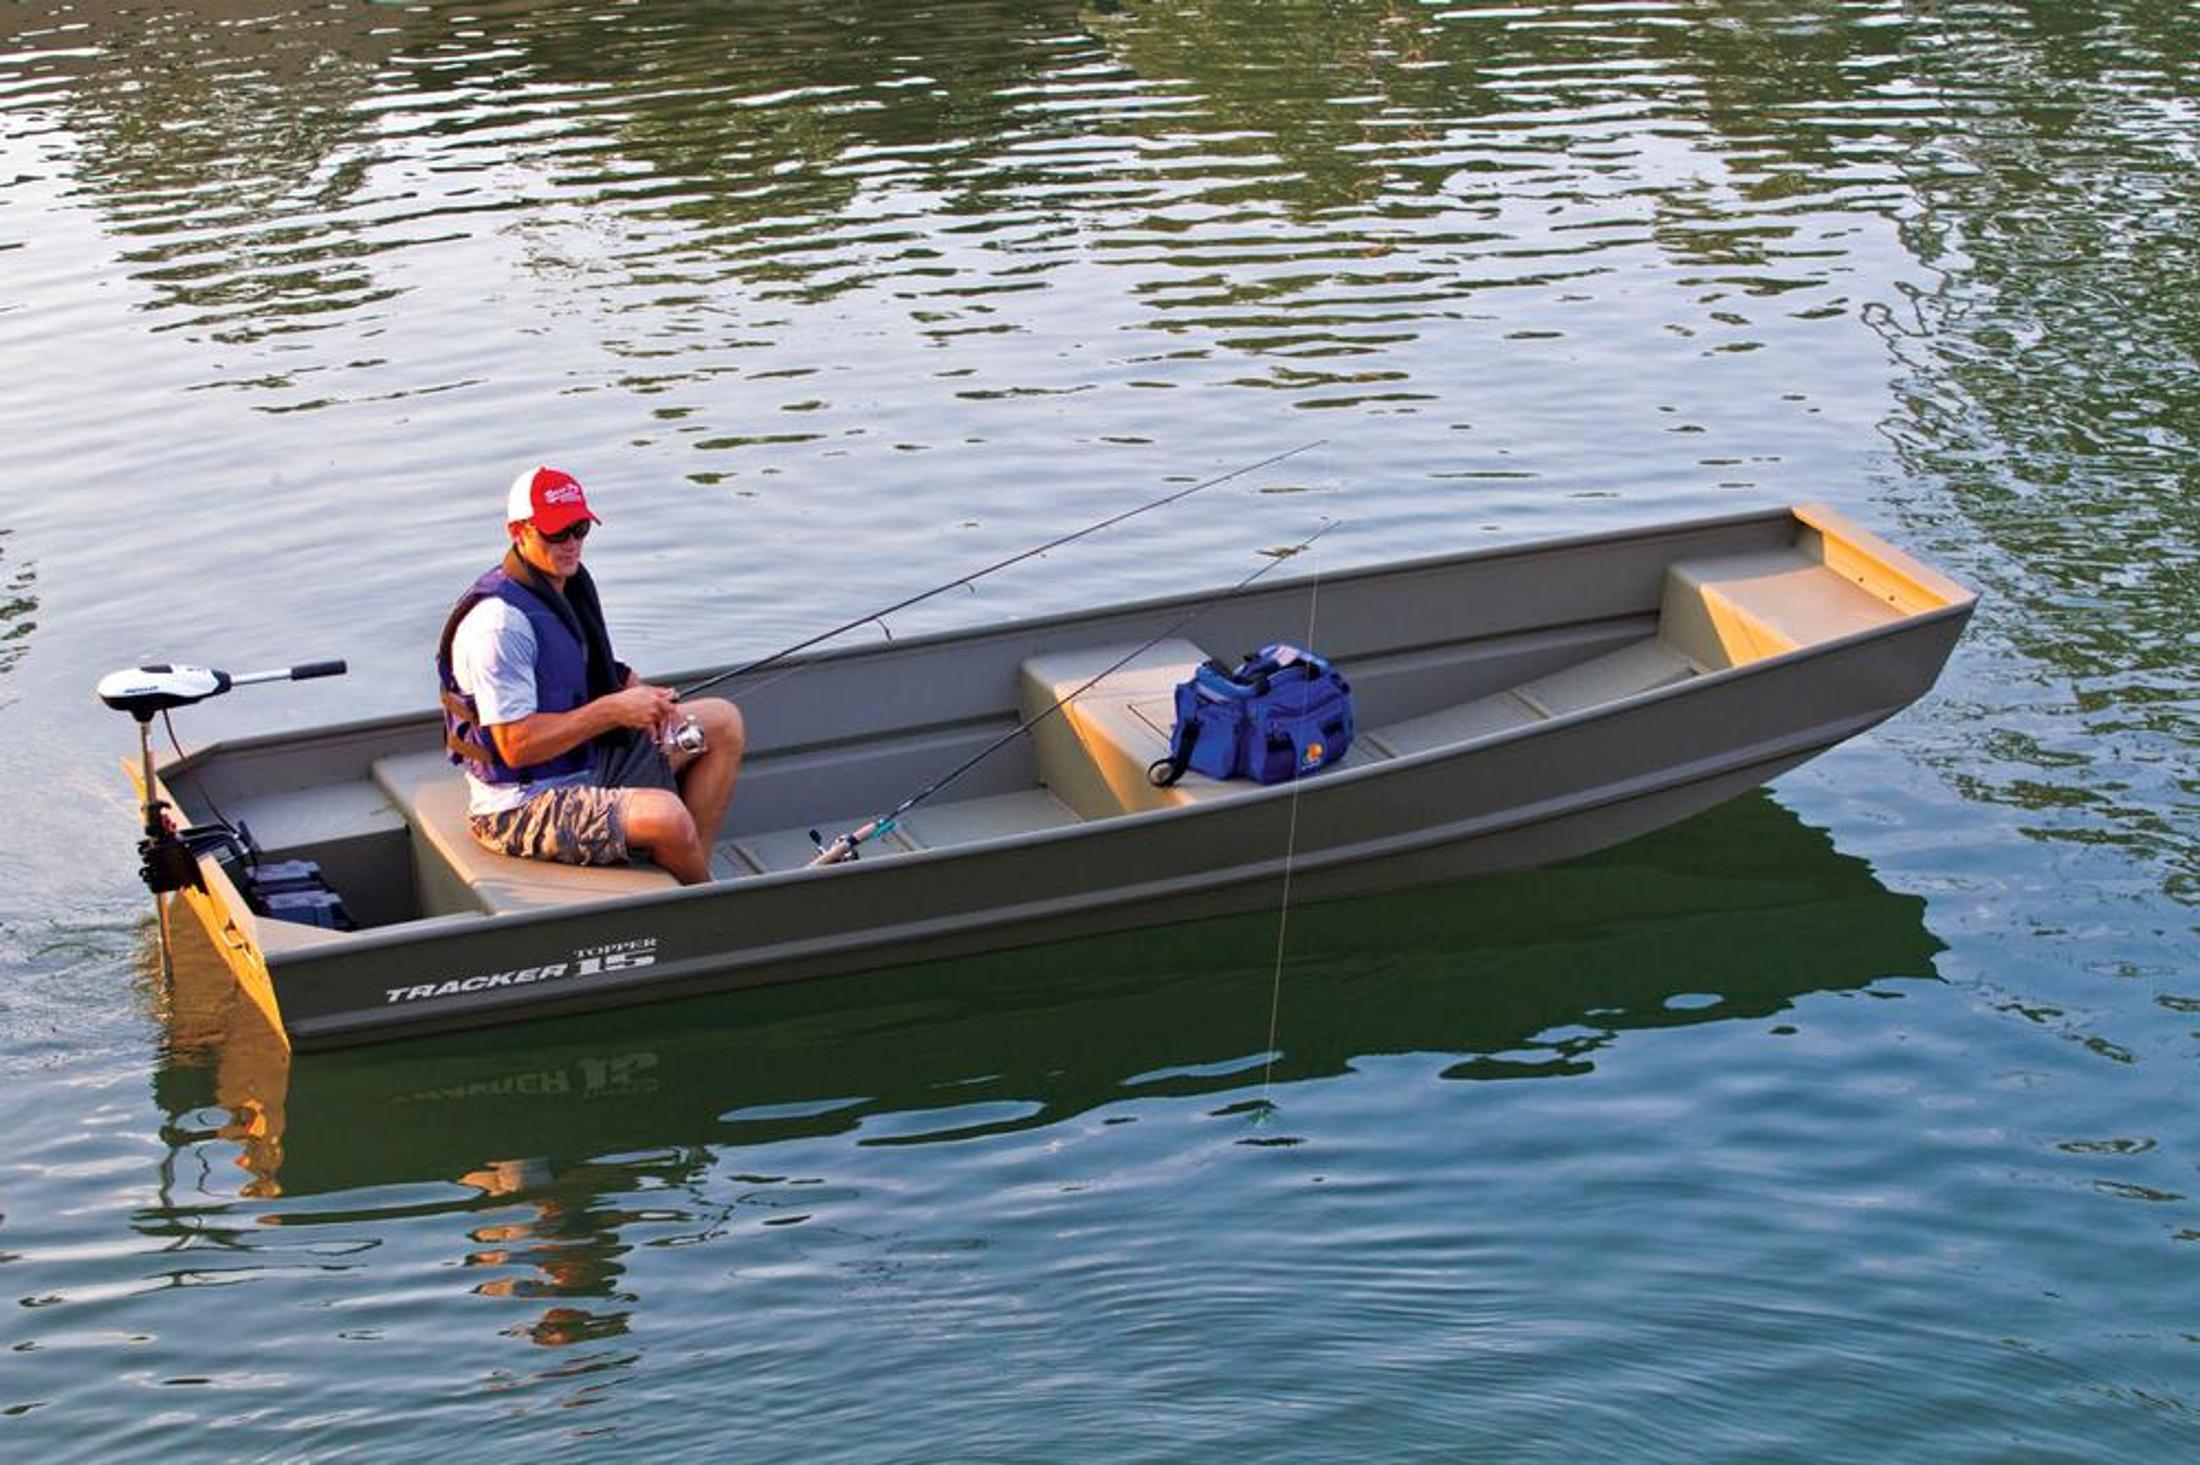 2013 Tracker Jon Boats Boat Type: Jon Boats Manufacturer/Builder: Tracker M...